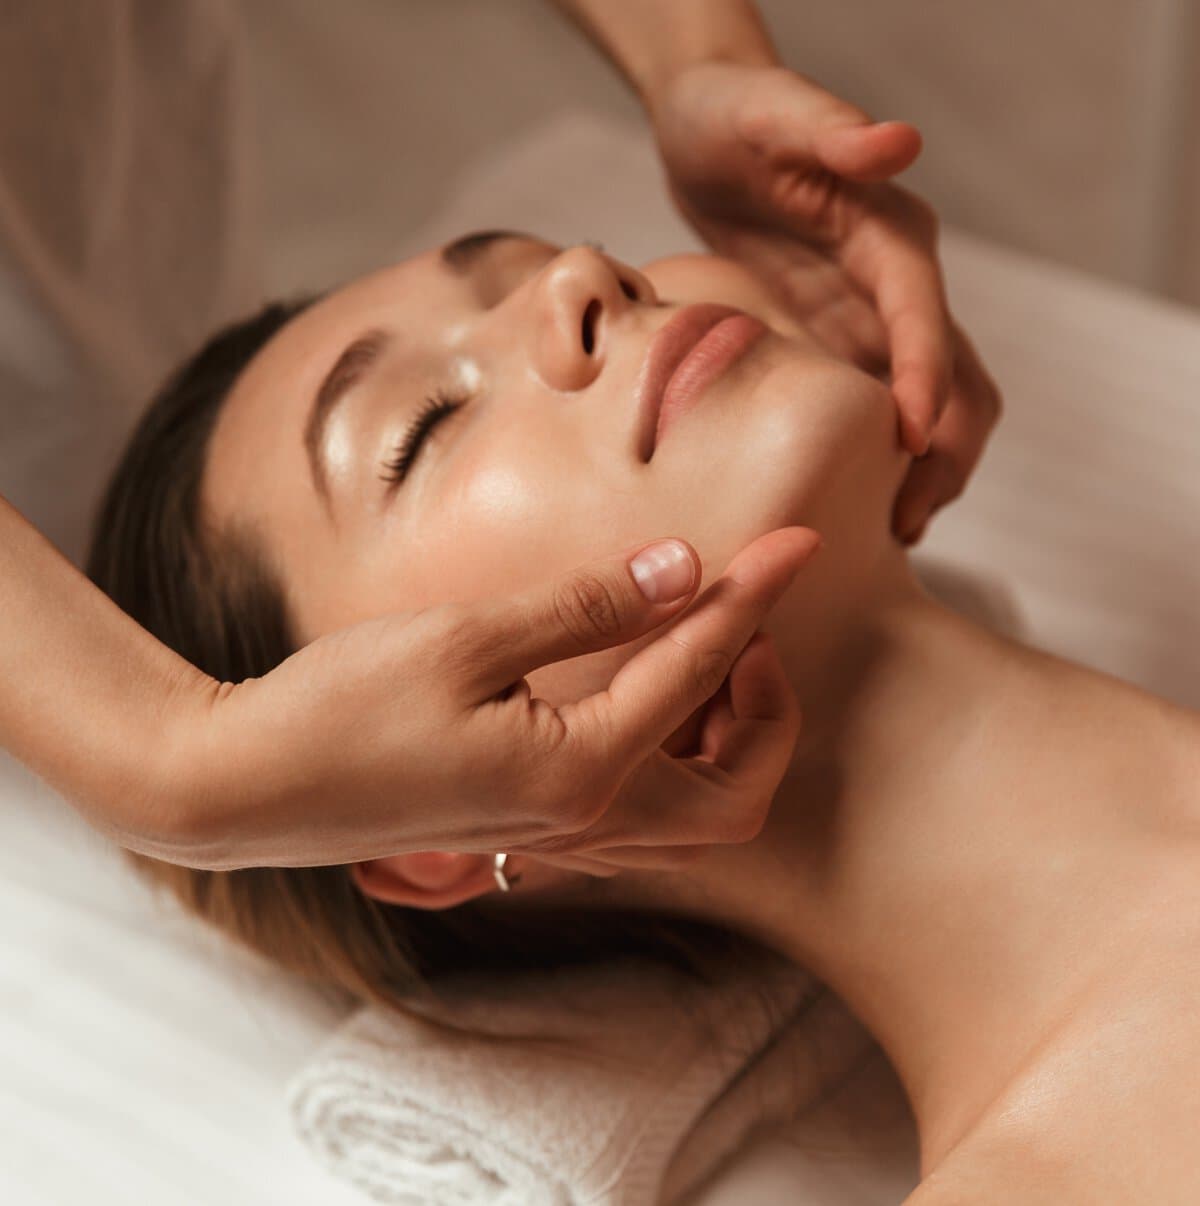 Sacramento Medical Spa model getting facial massage